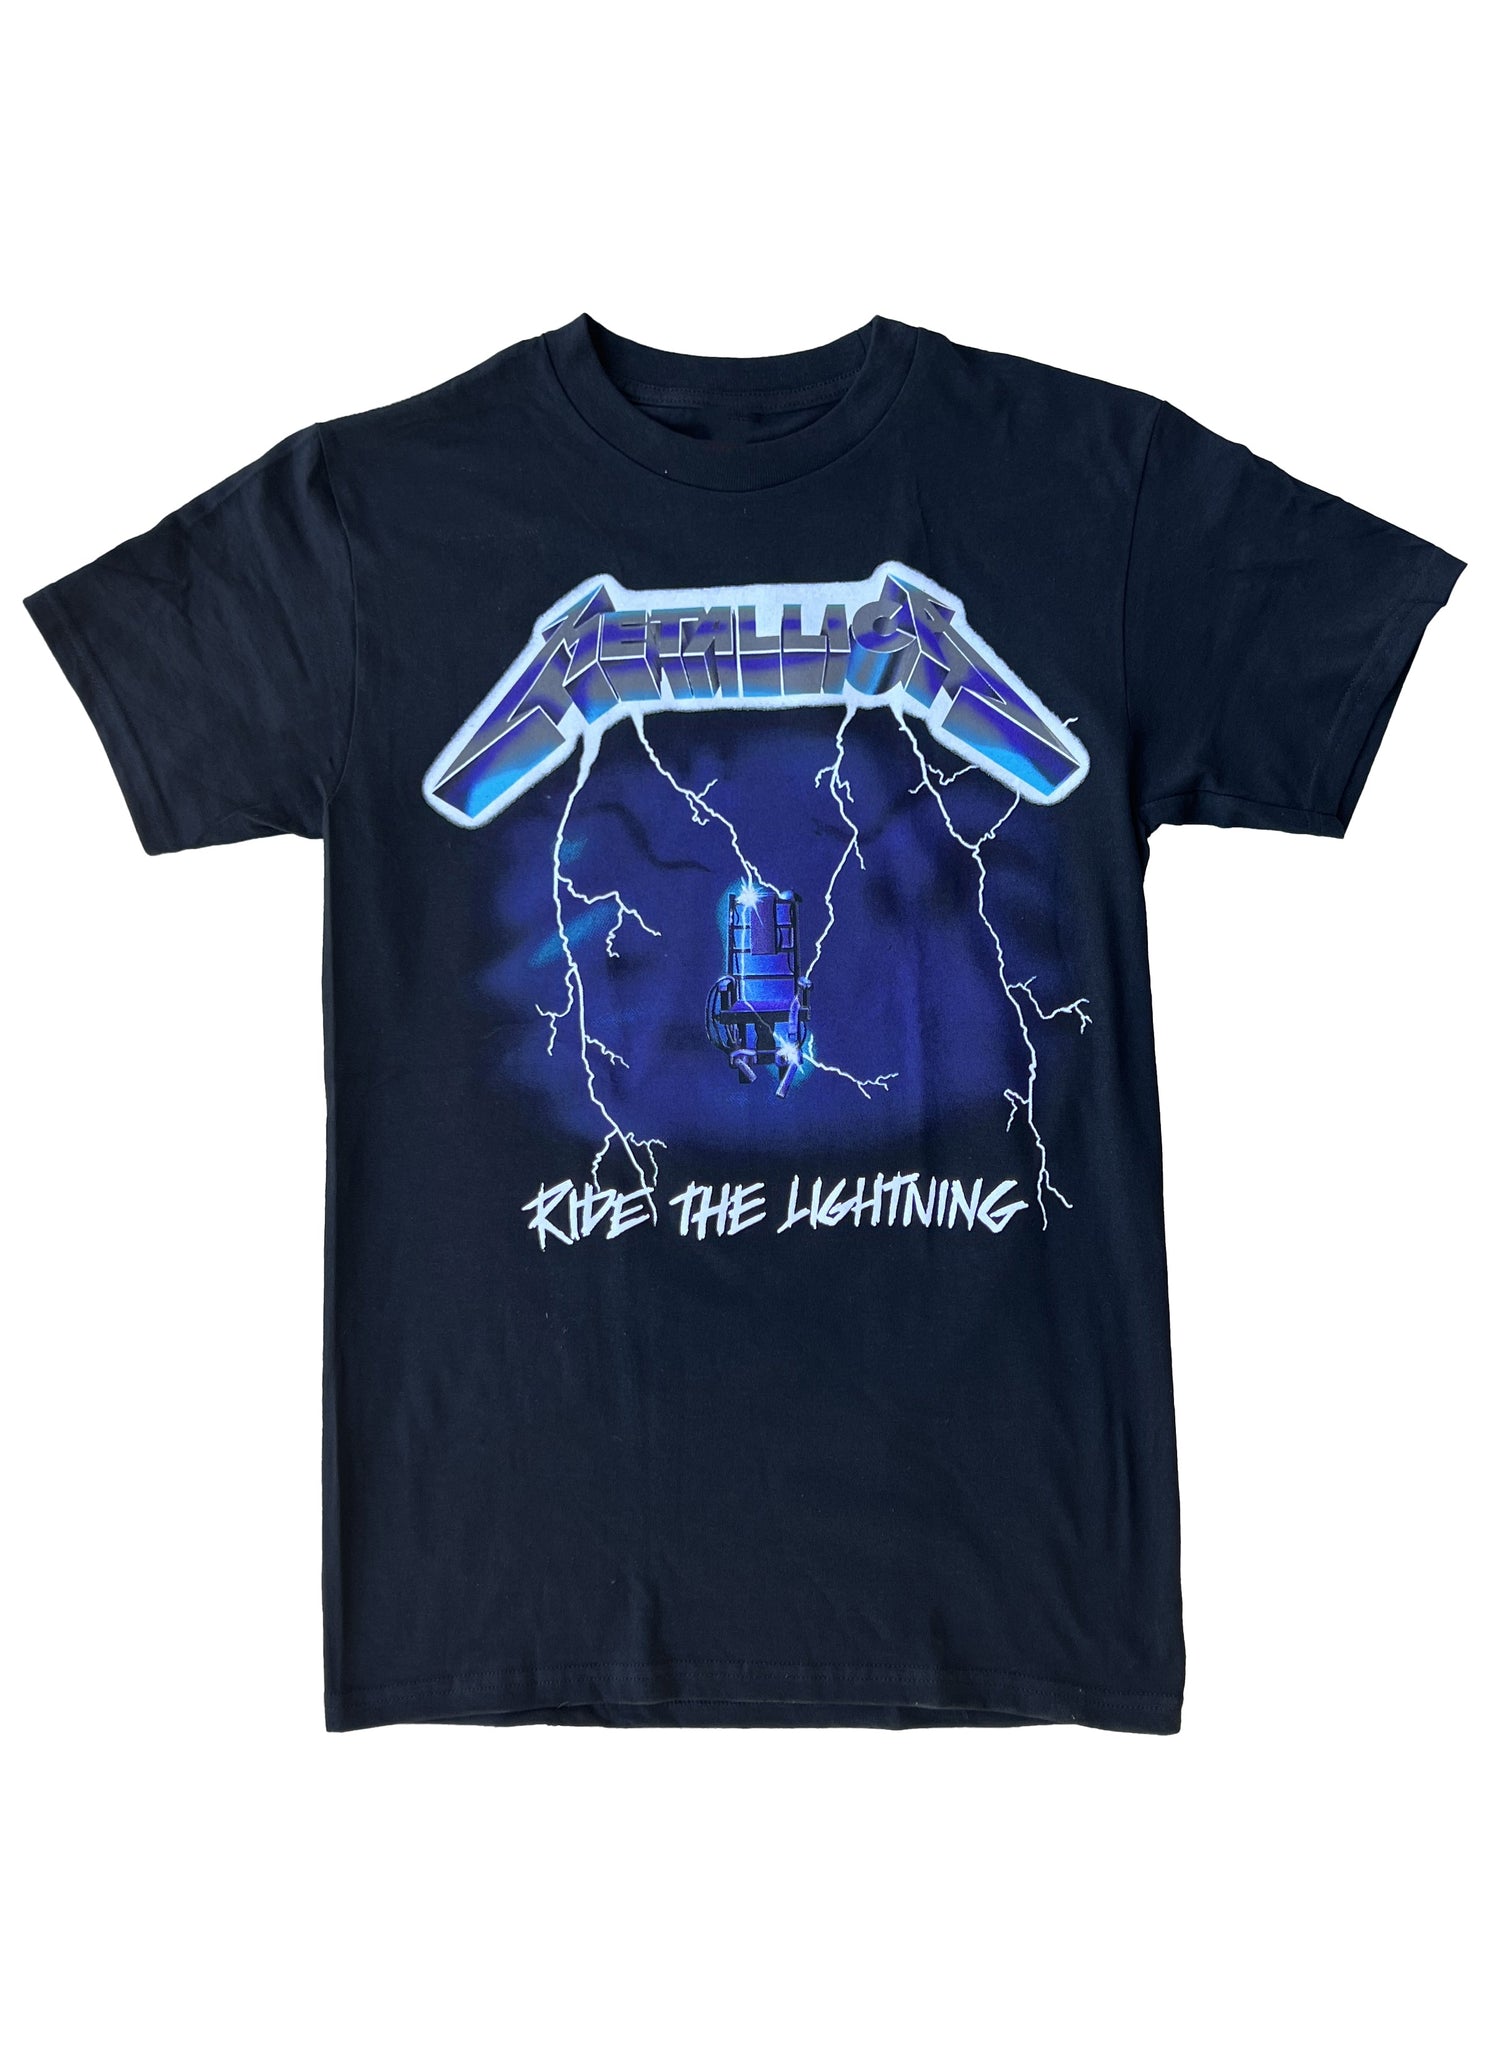 Metallica Ride The Lightning Graphic Tee